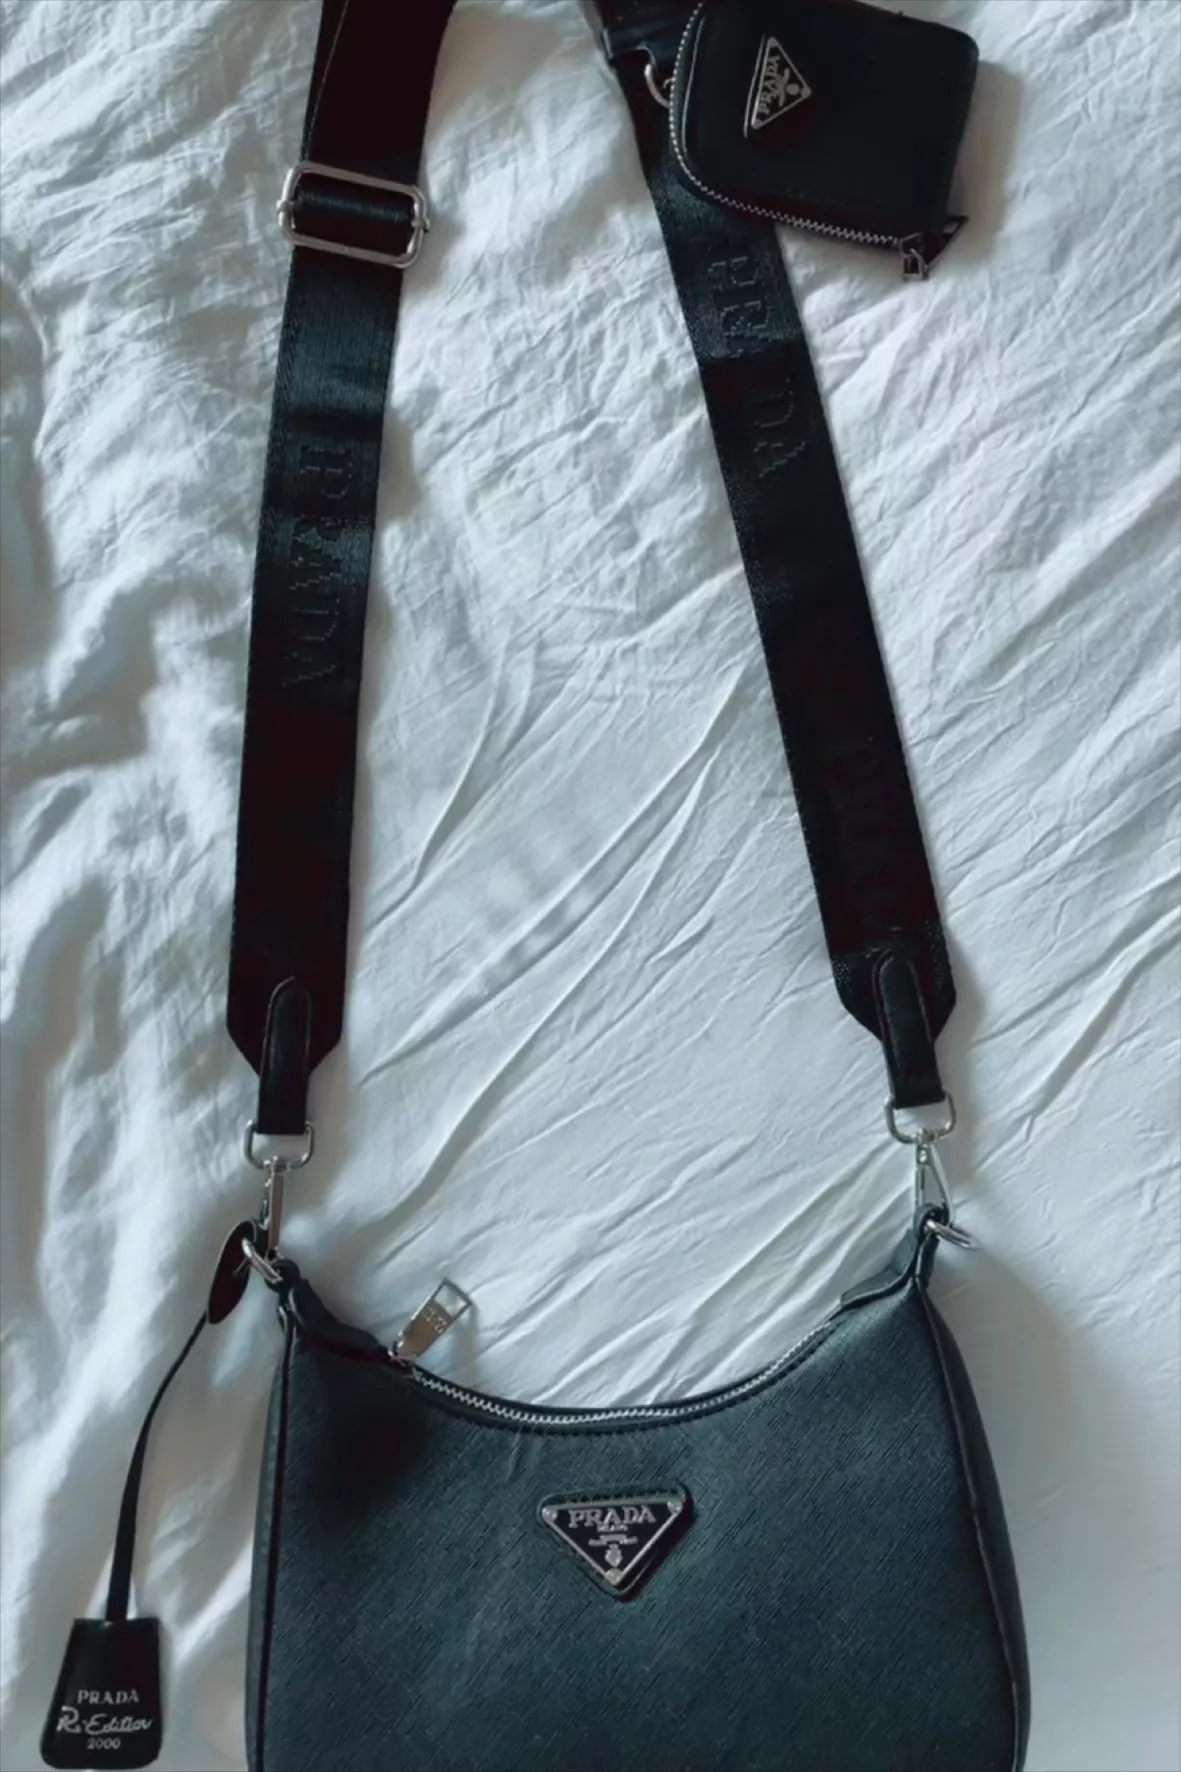 Prada Re-Edition 2005 Re-Nylon bag curated on LTK